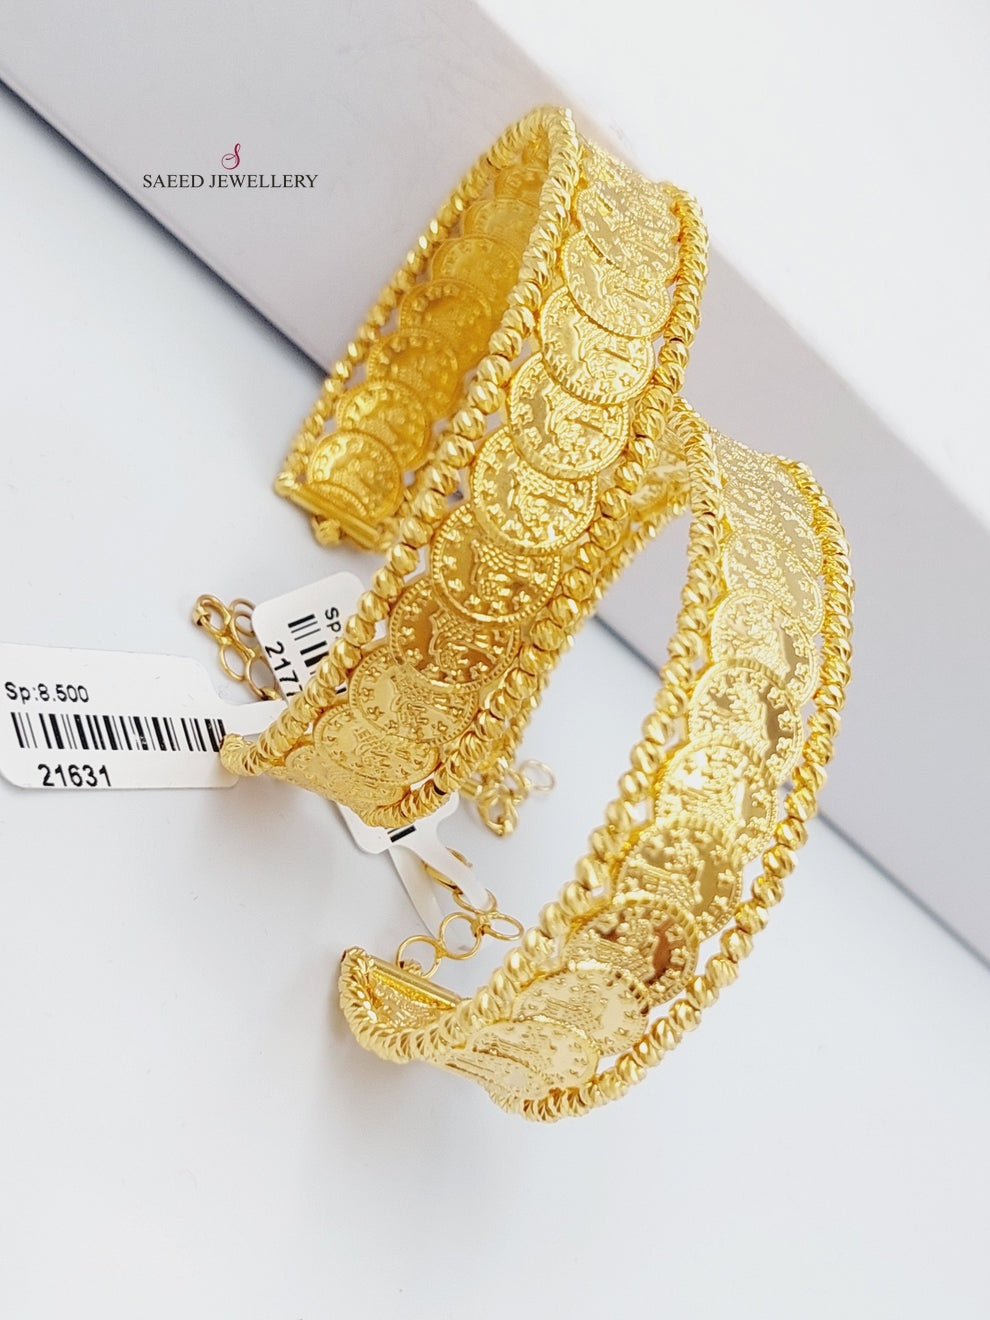 21K Rashadi Bracelet Made of 21K Yellow Gold by Saeed Jewelry-23648